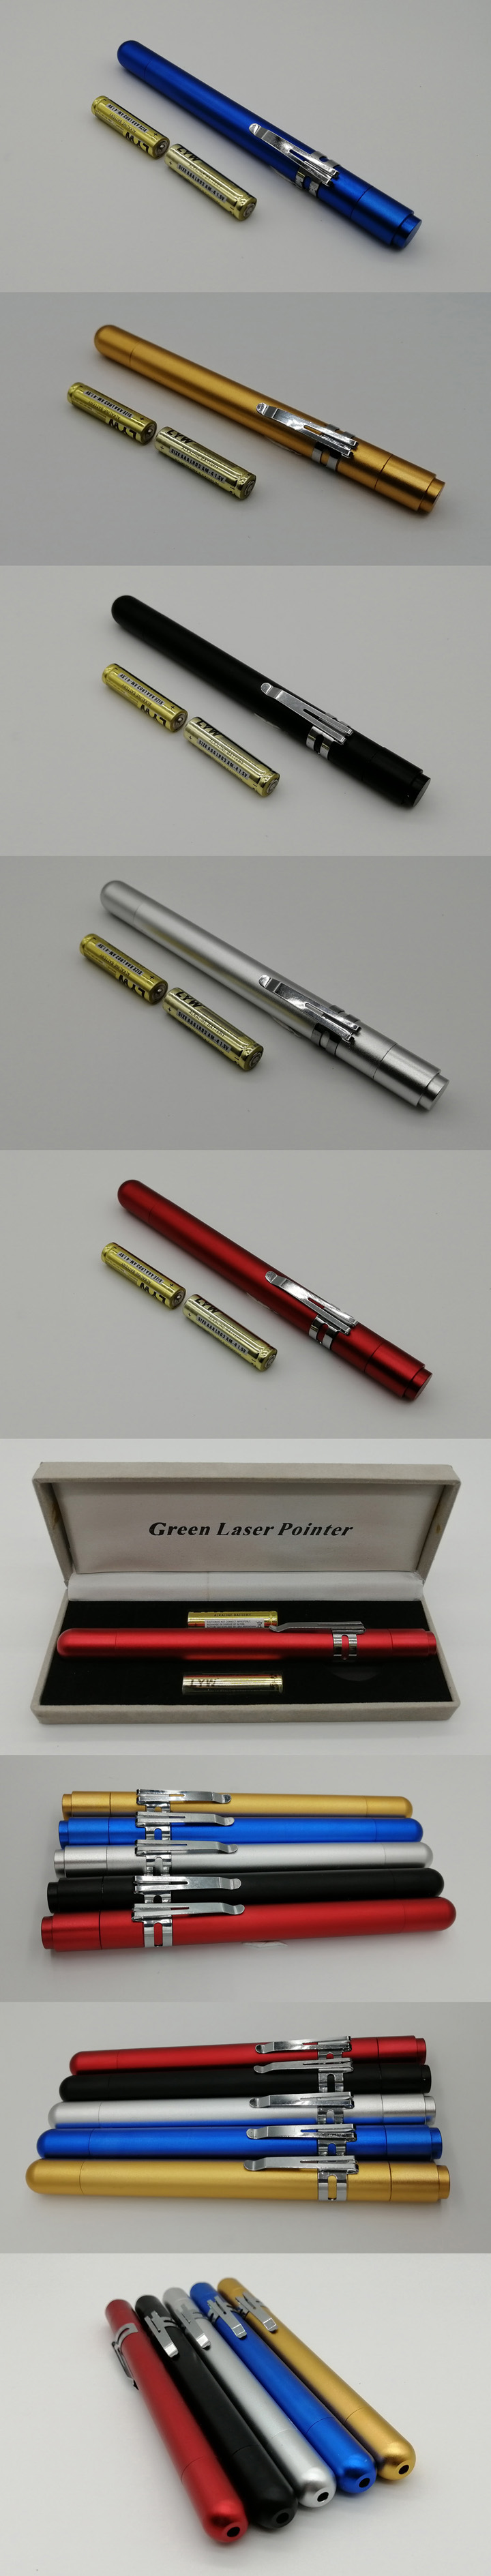 stylo pointeur laser 450 nm